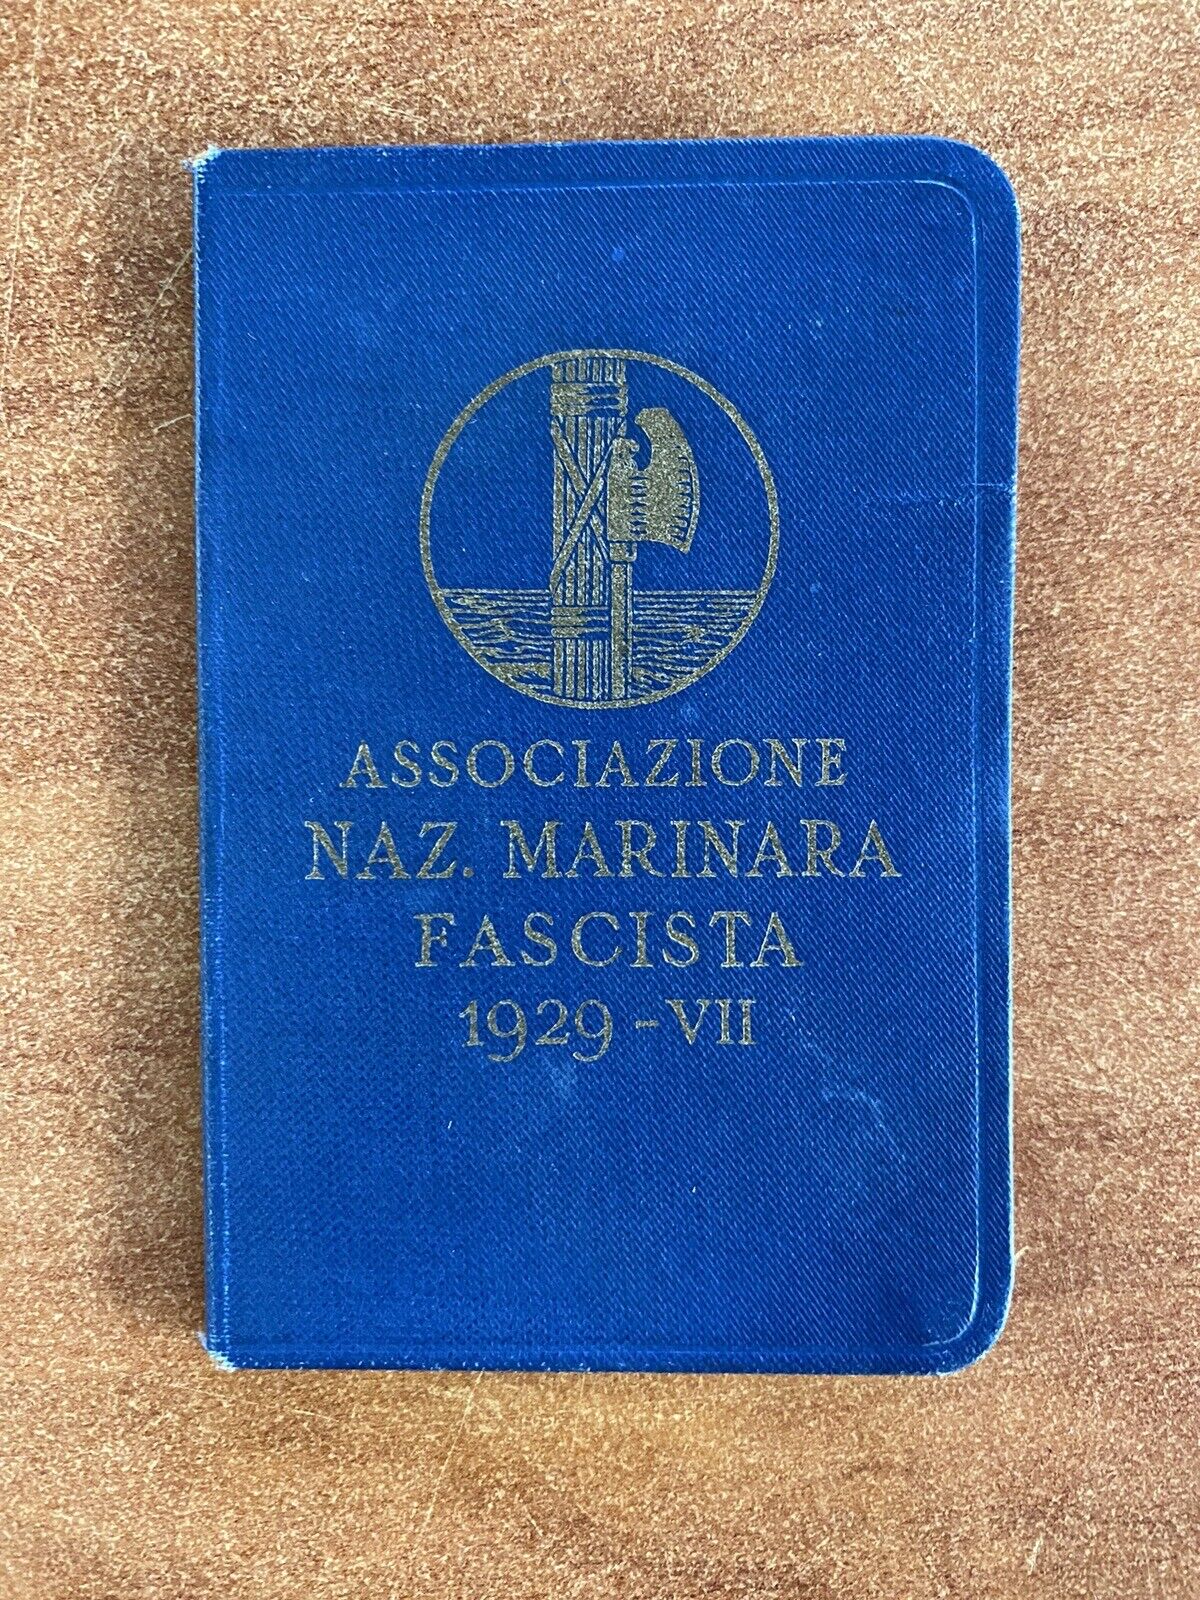 Old Vintage Italy fascist naz maritime association Membership Document 1929